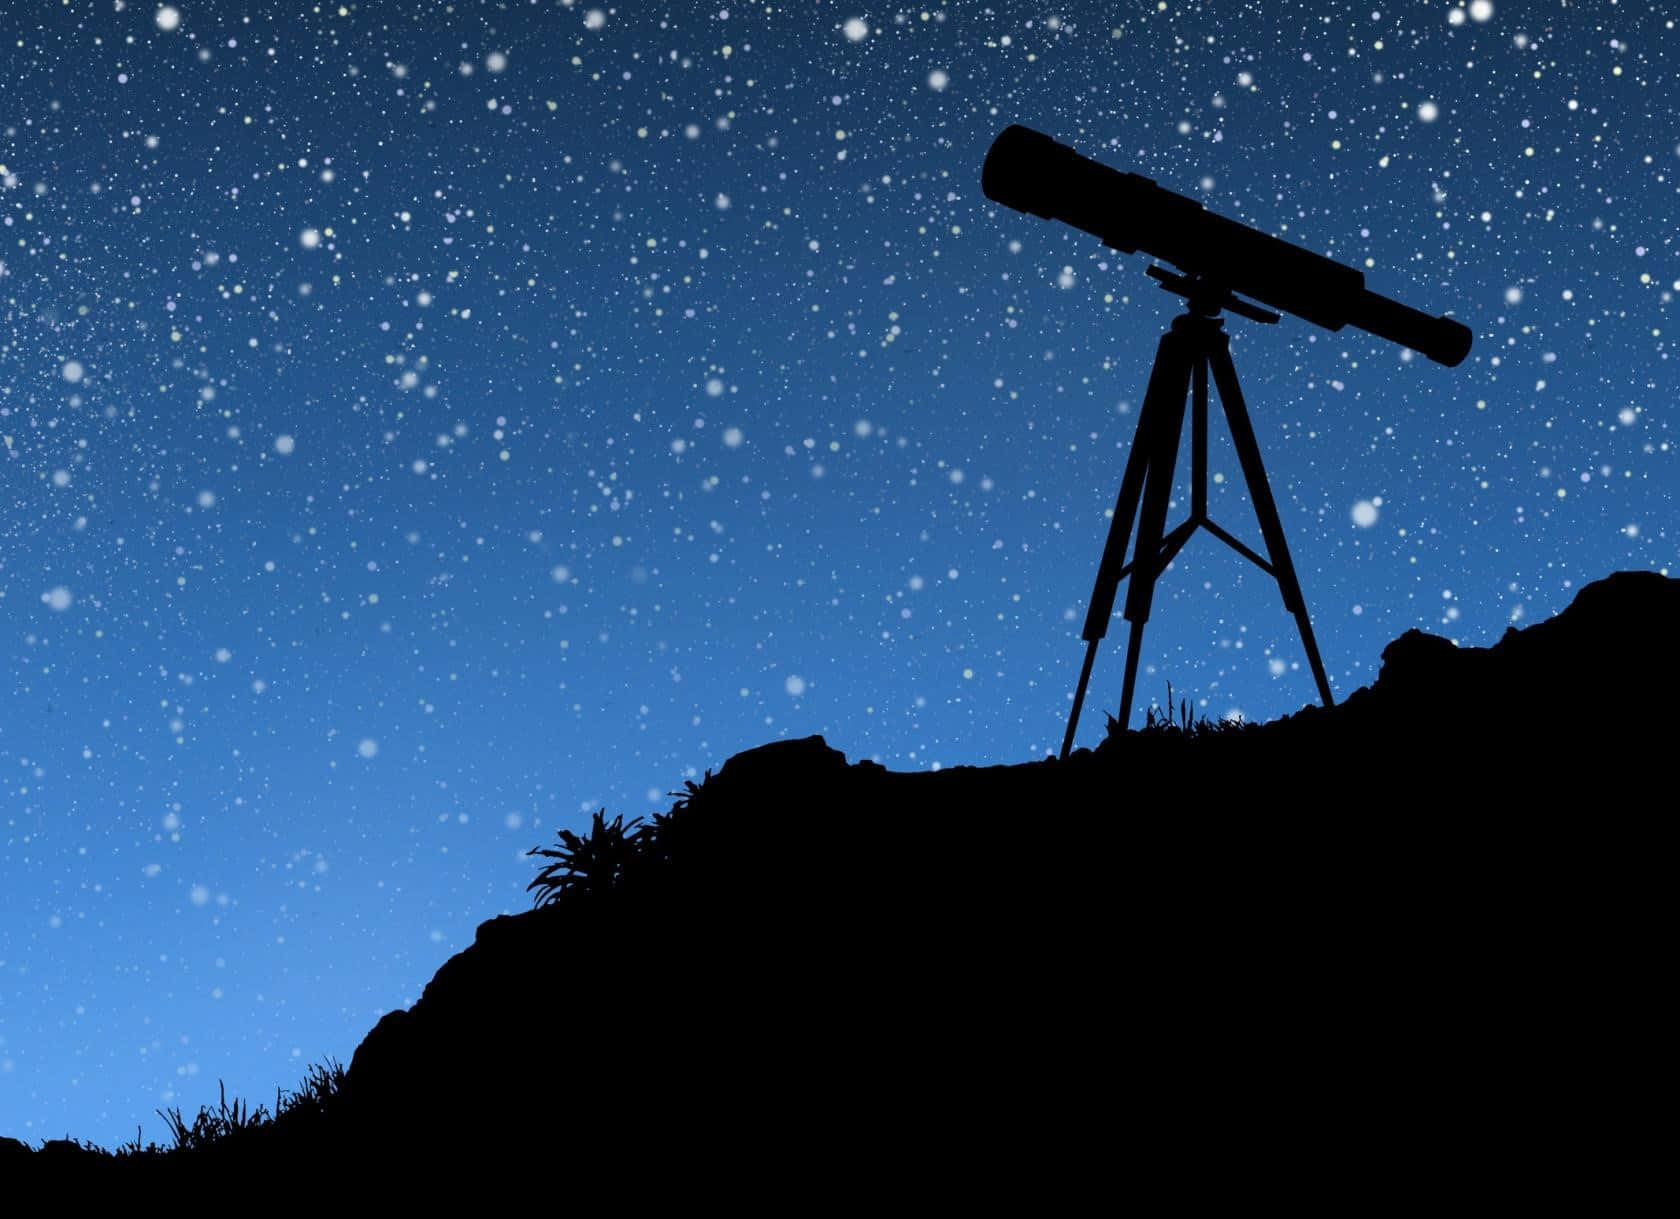 A Telescope In The Night Sky